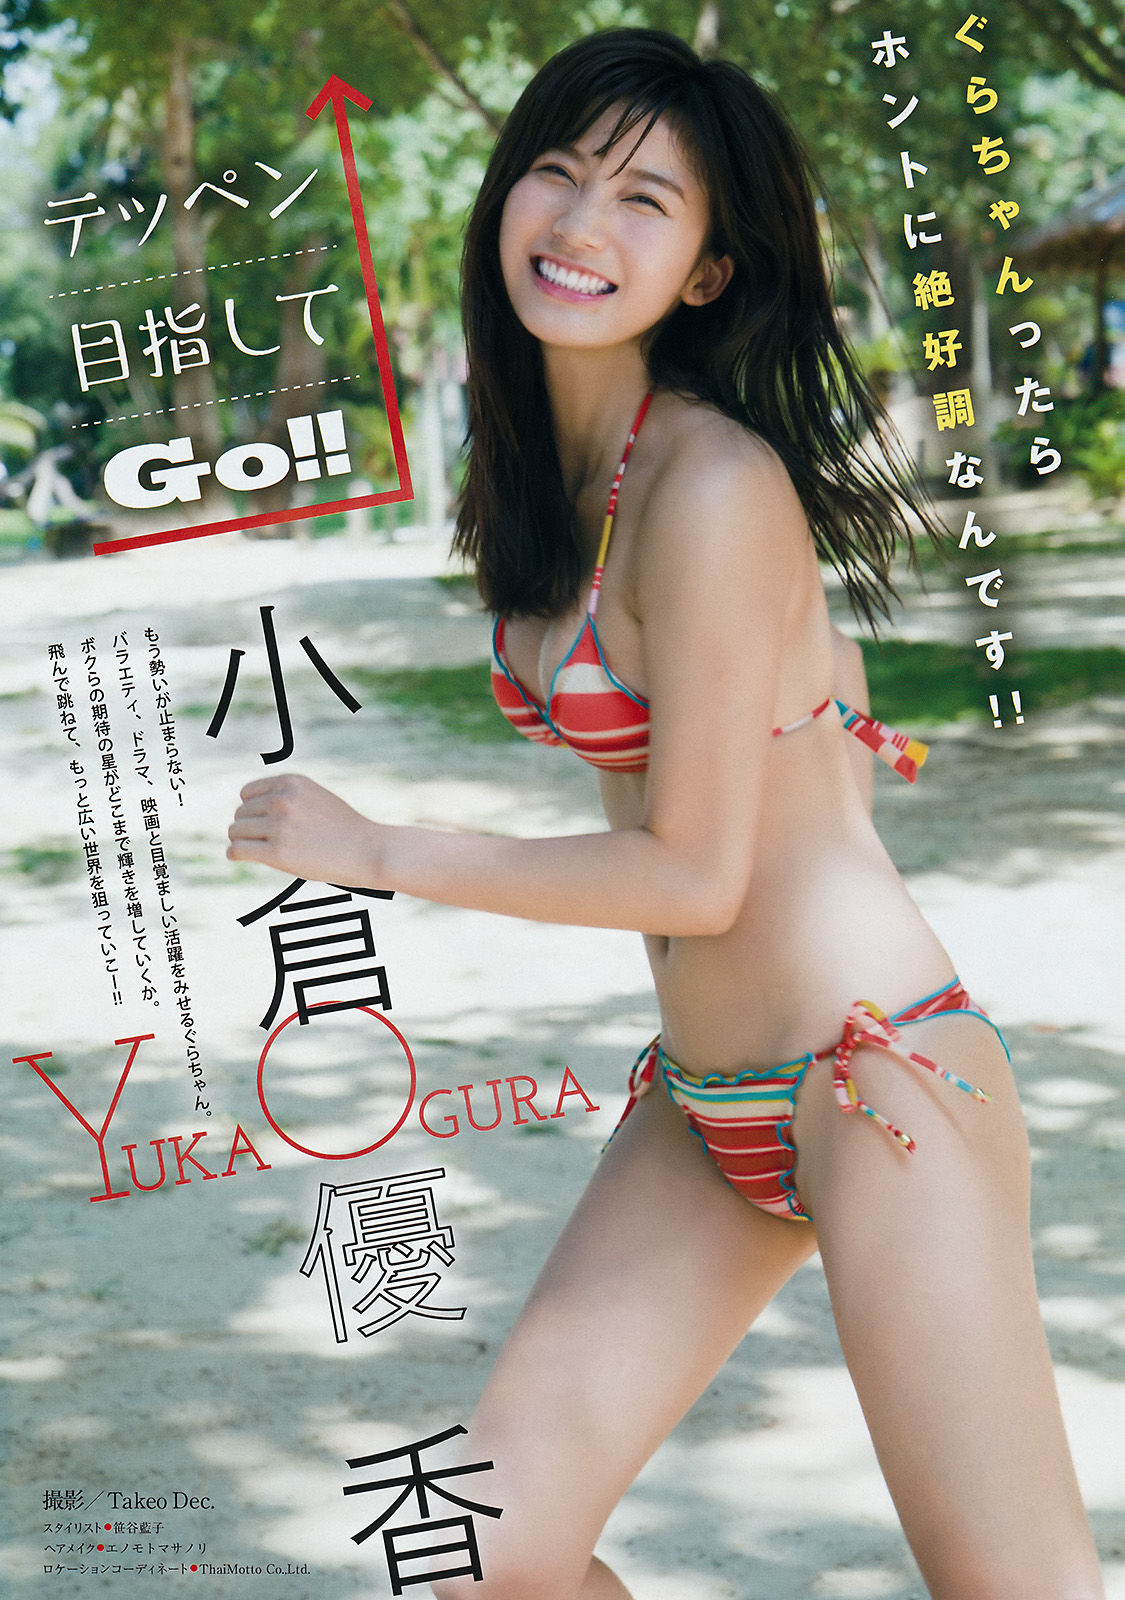 [Young Magazine]美胸日本嫩模:小仓优香高品质写真作品个人分享(12P)